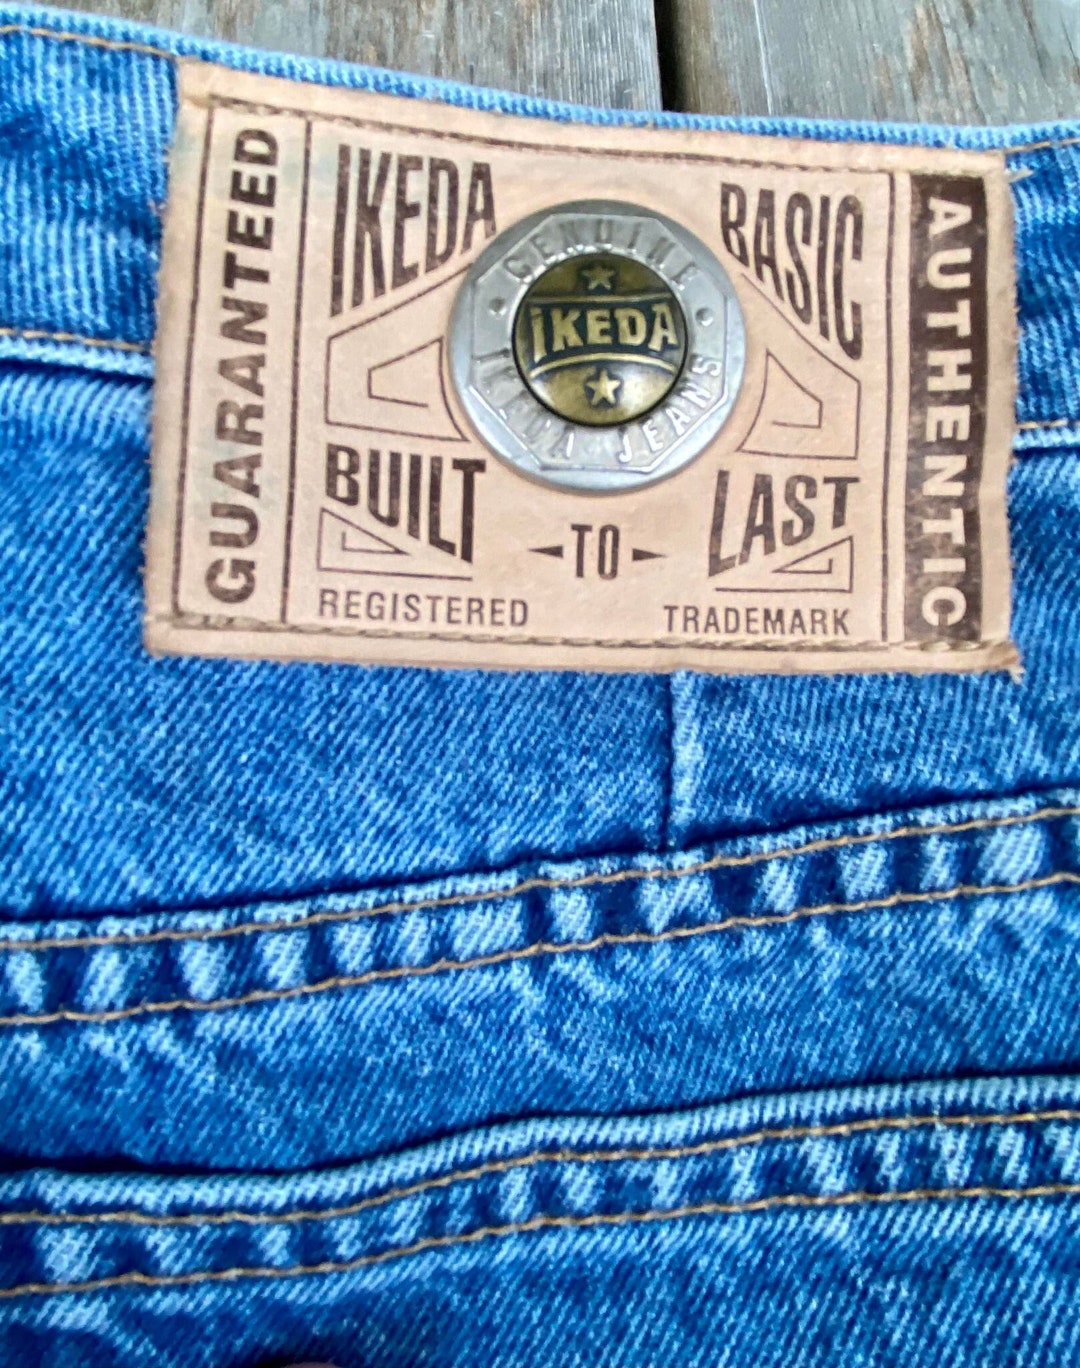 Vintage IKEDA Jeans Retro High Rise Denim Pants Made in - Etsy